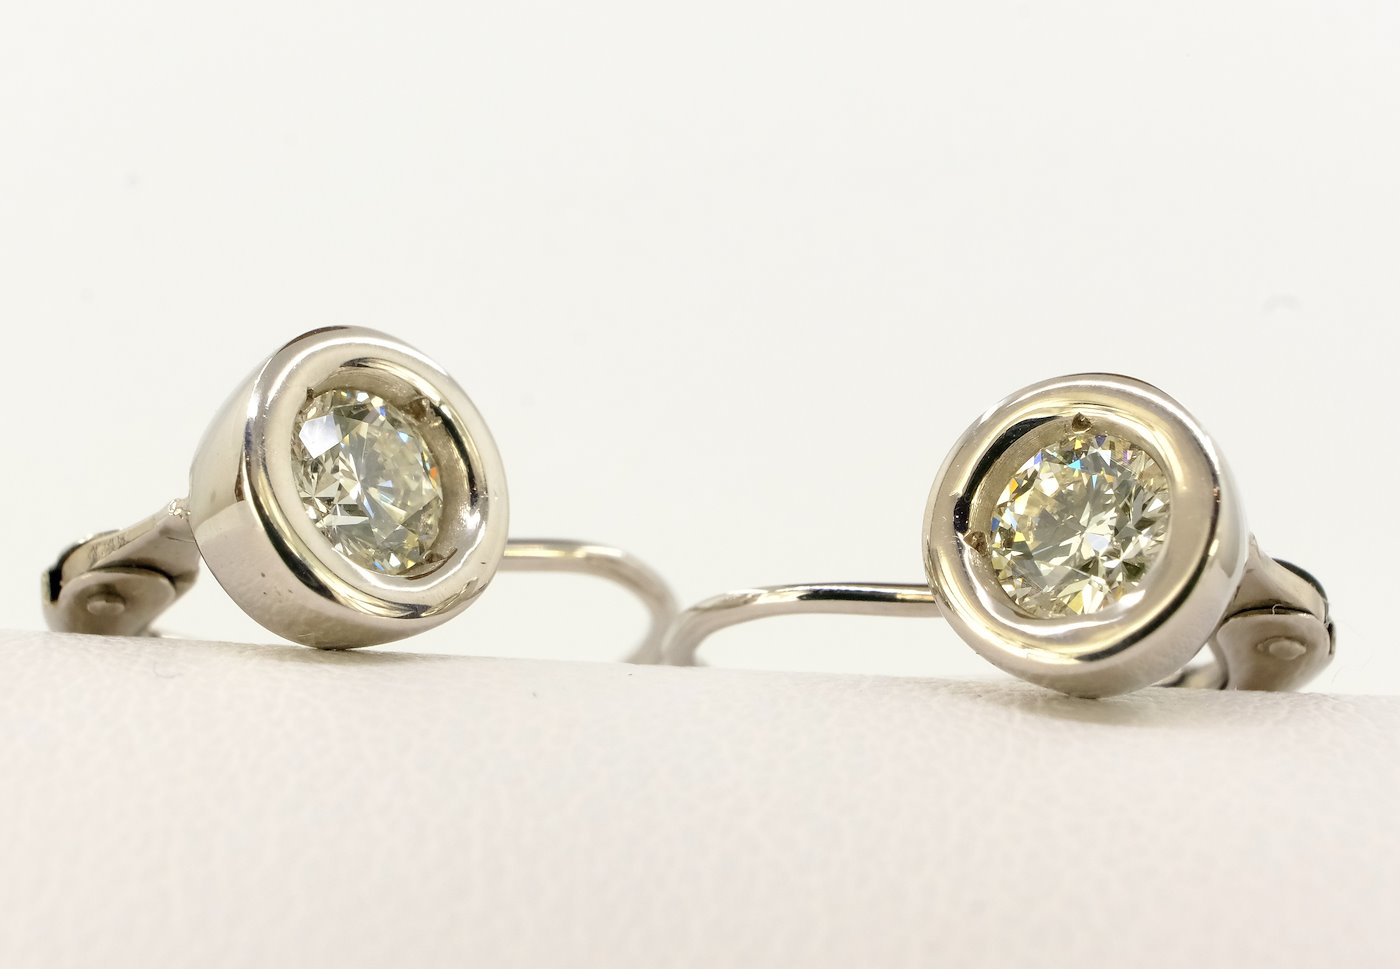 Anton Schwartz - Naušnice s diamanty závěsné osazené diamanty 2x 0,30 ct J/VS VG, zlato 585/1000, hrubá hmotnost 2,49 g